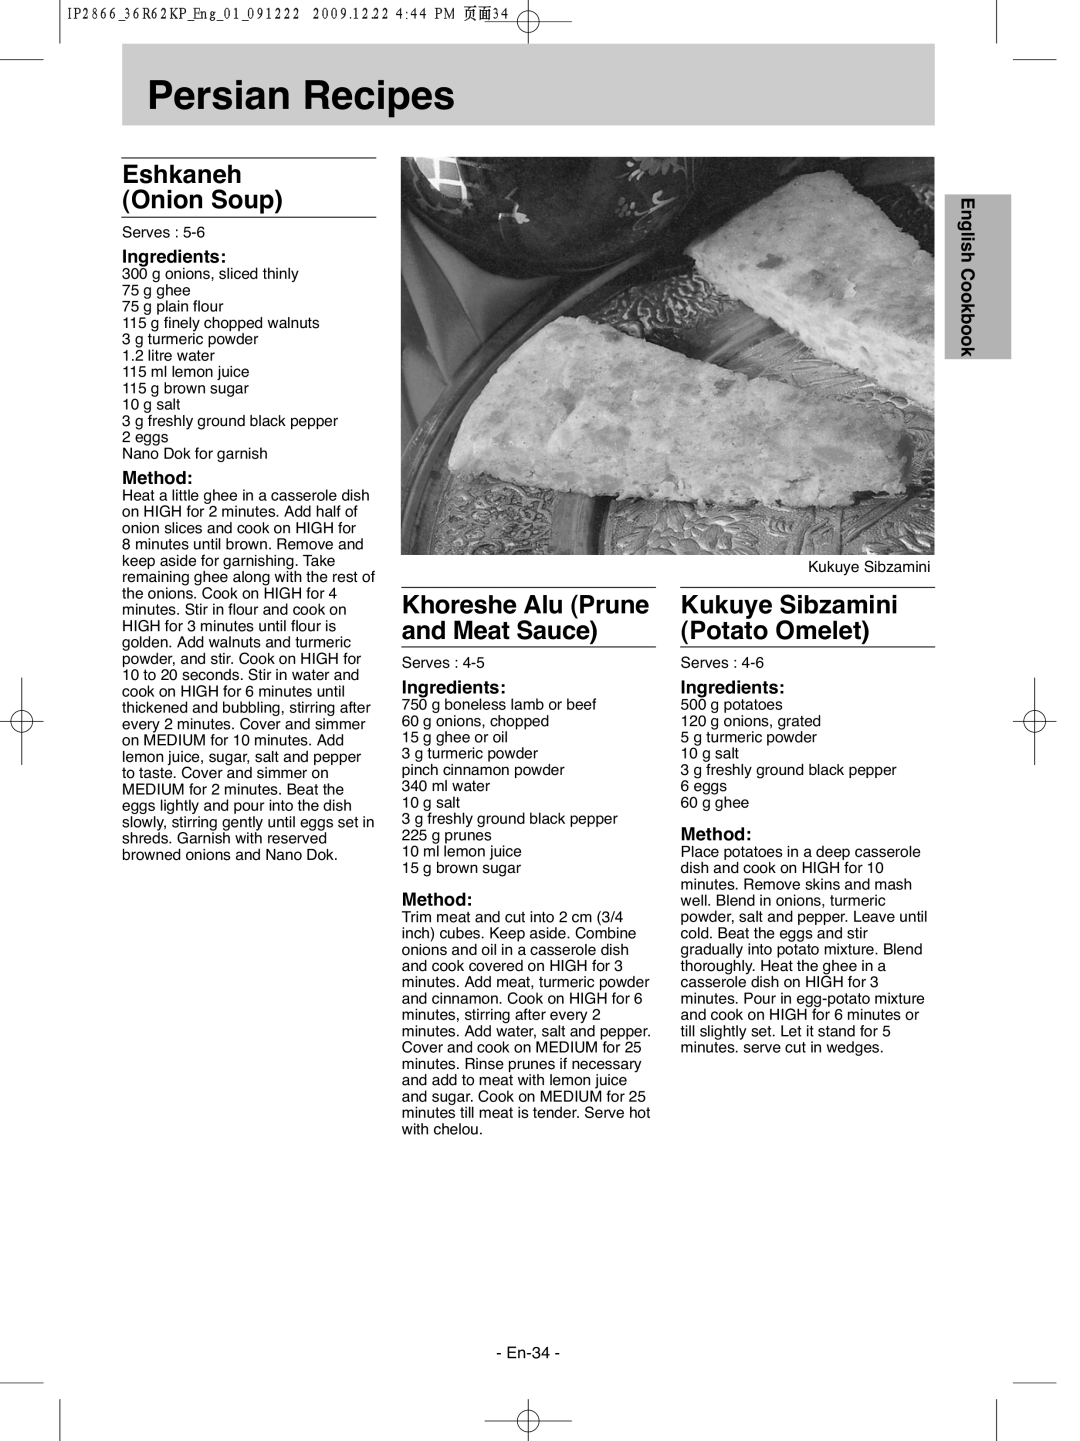 Panasonic NN-G335WF manual Eshkaneh Onion Soup, Khoreshe Alu Prune and Meat Sauce, Kukuye Sibzamini Potato Omelet 